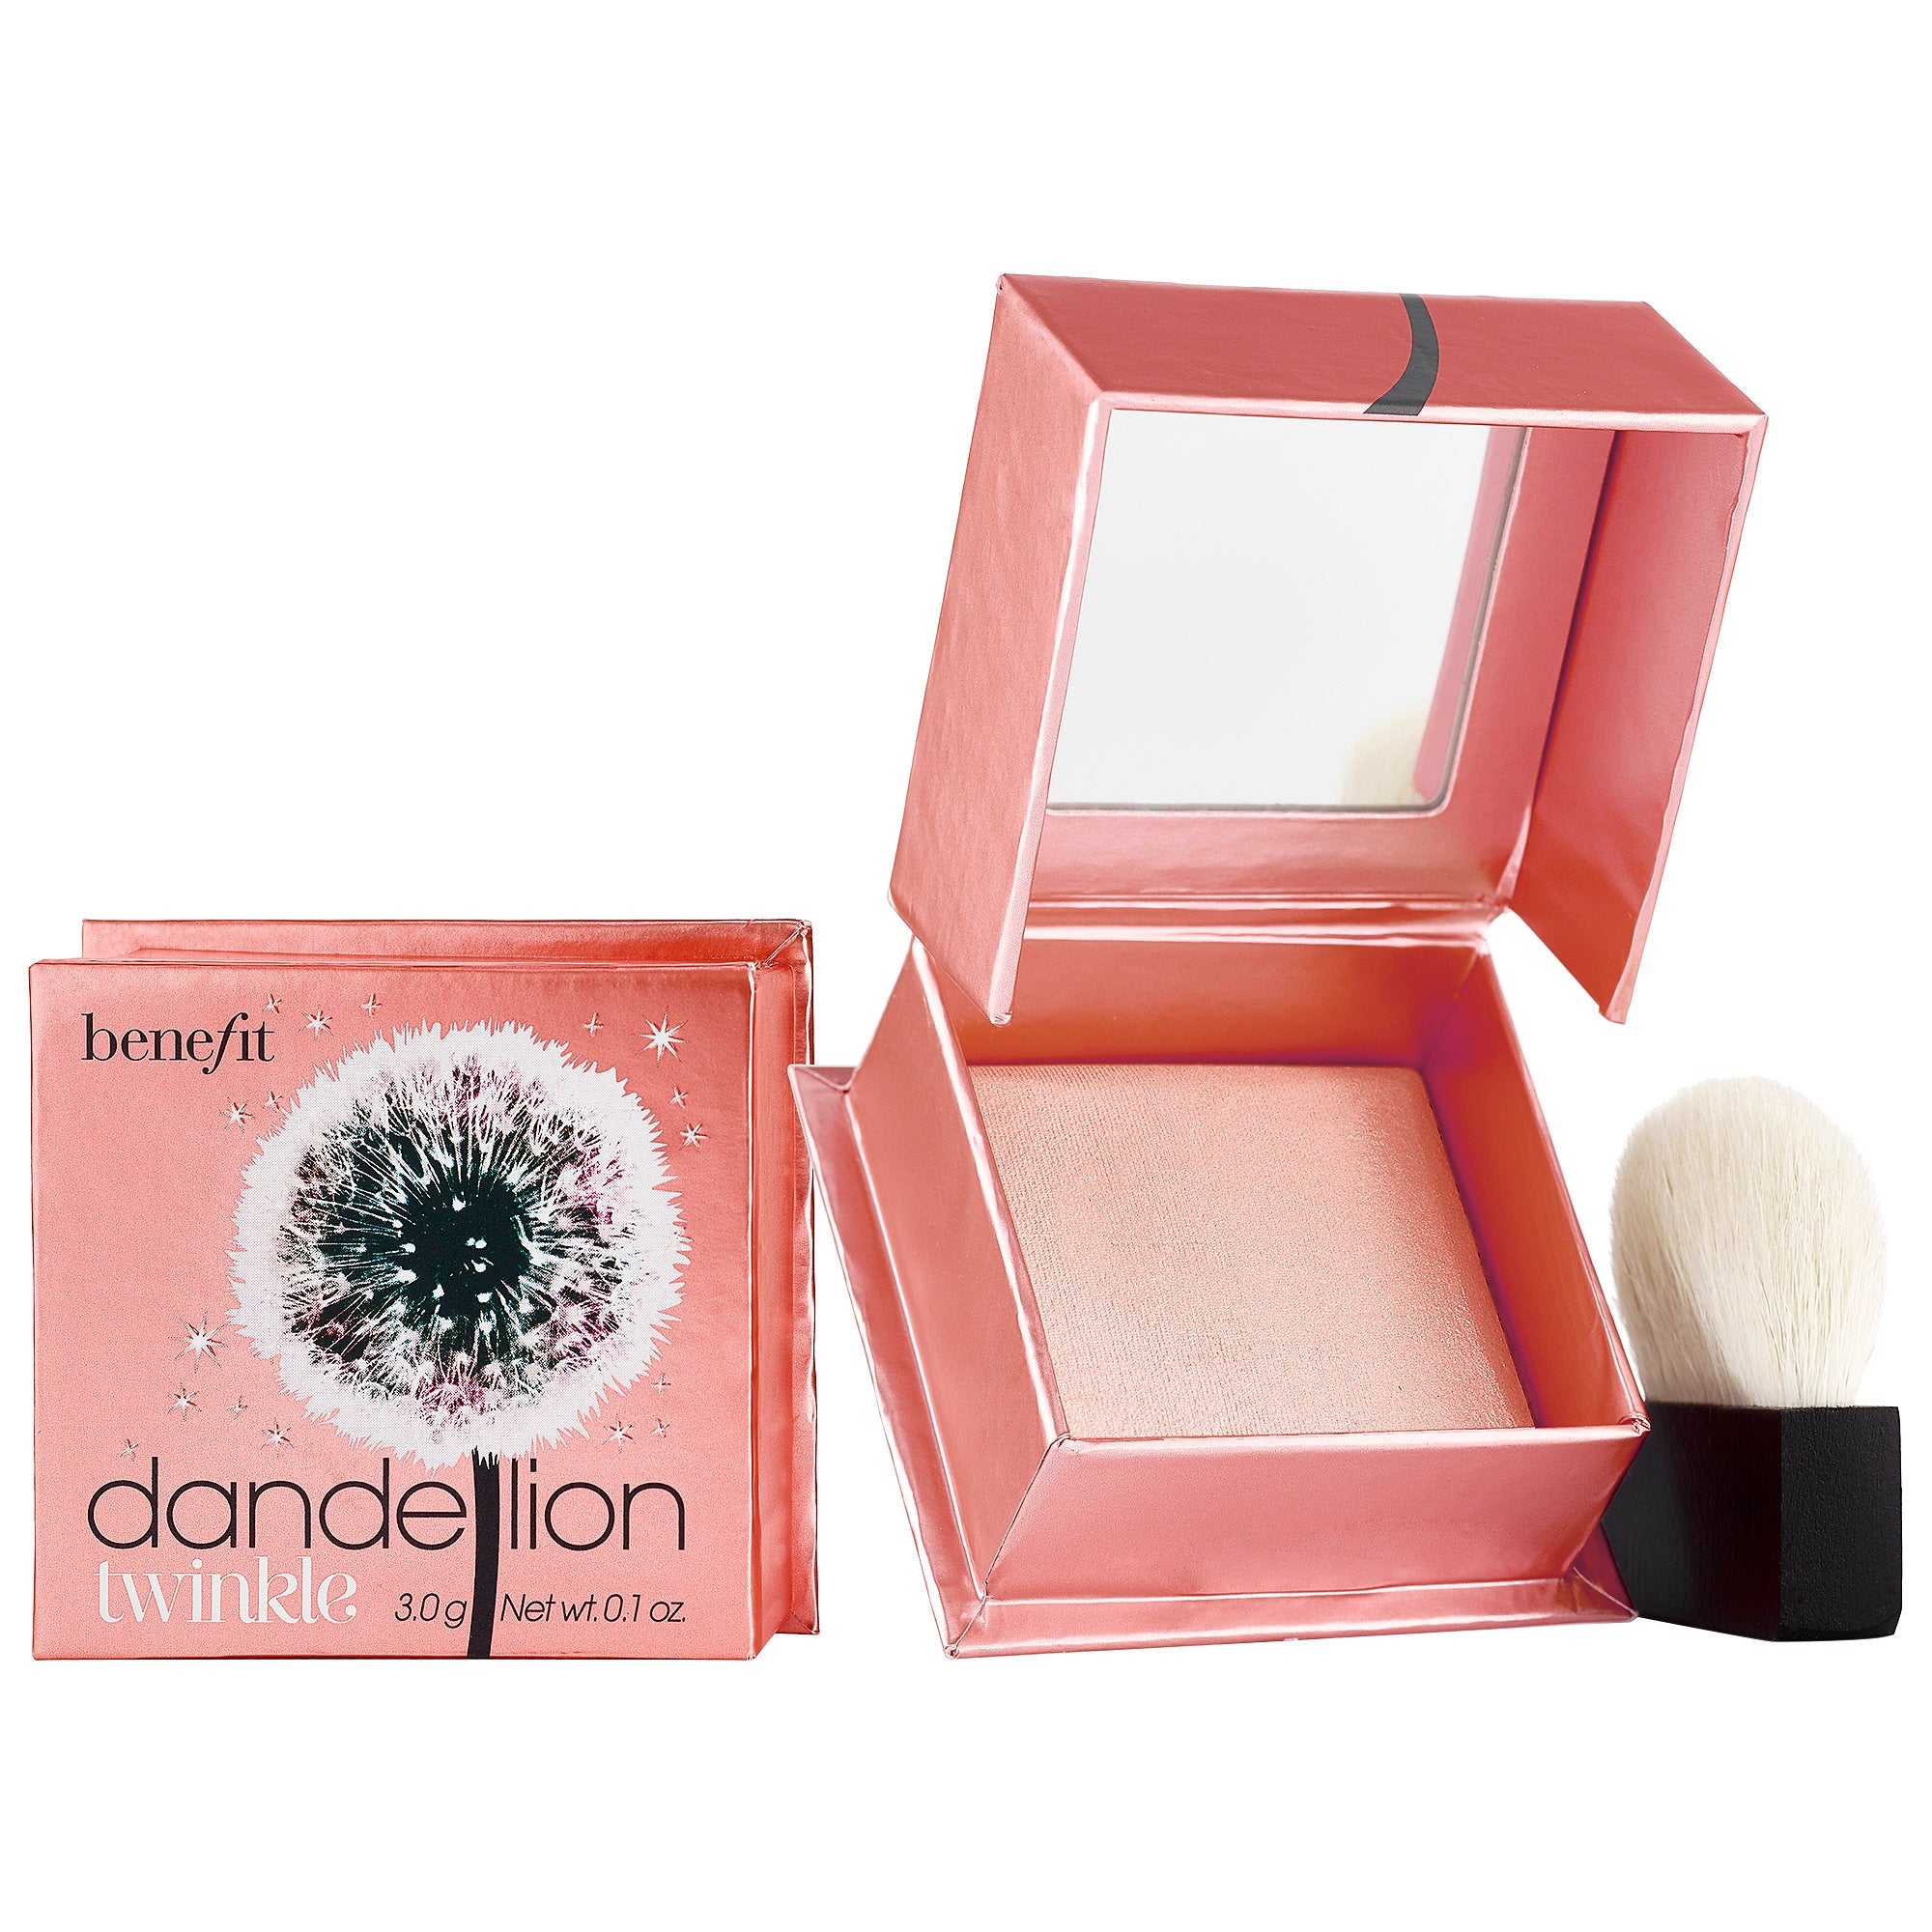 benefit-dandelion